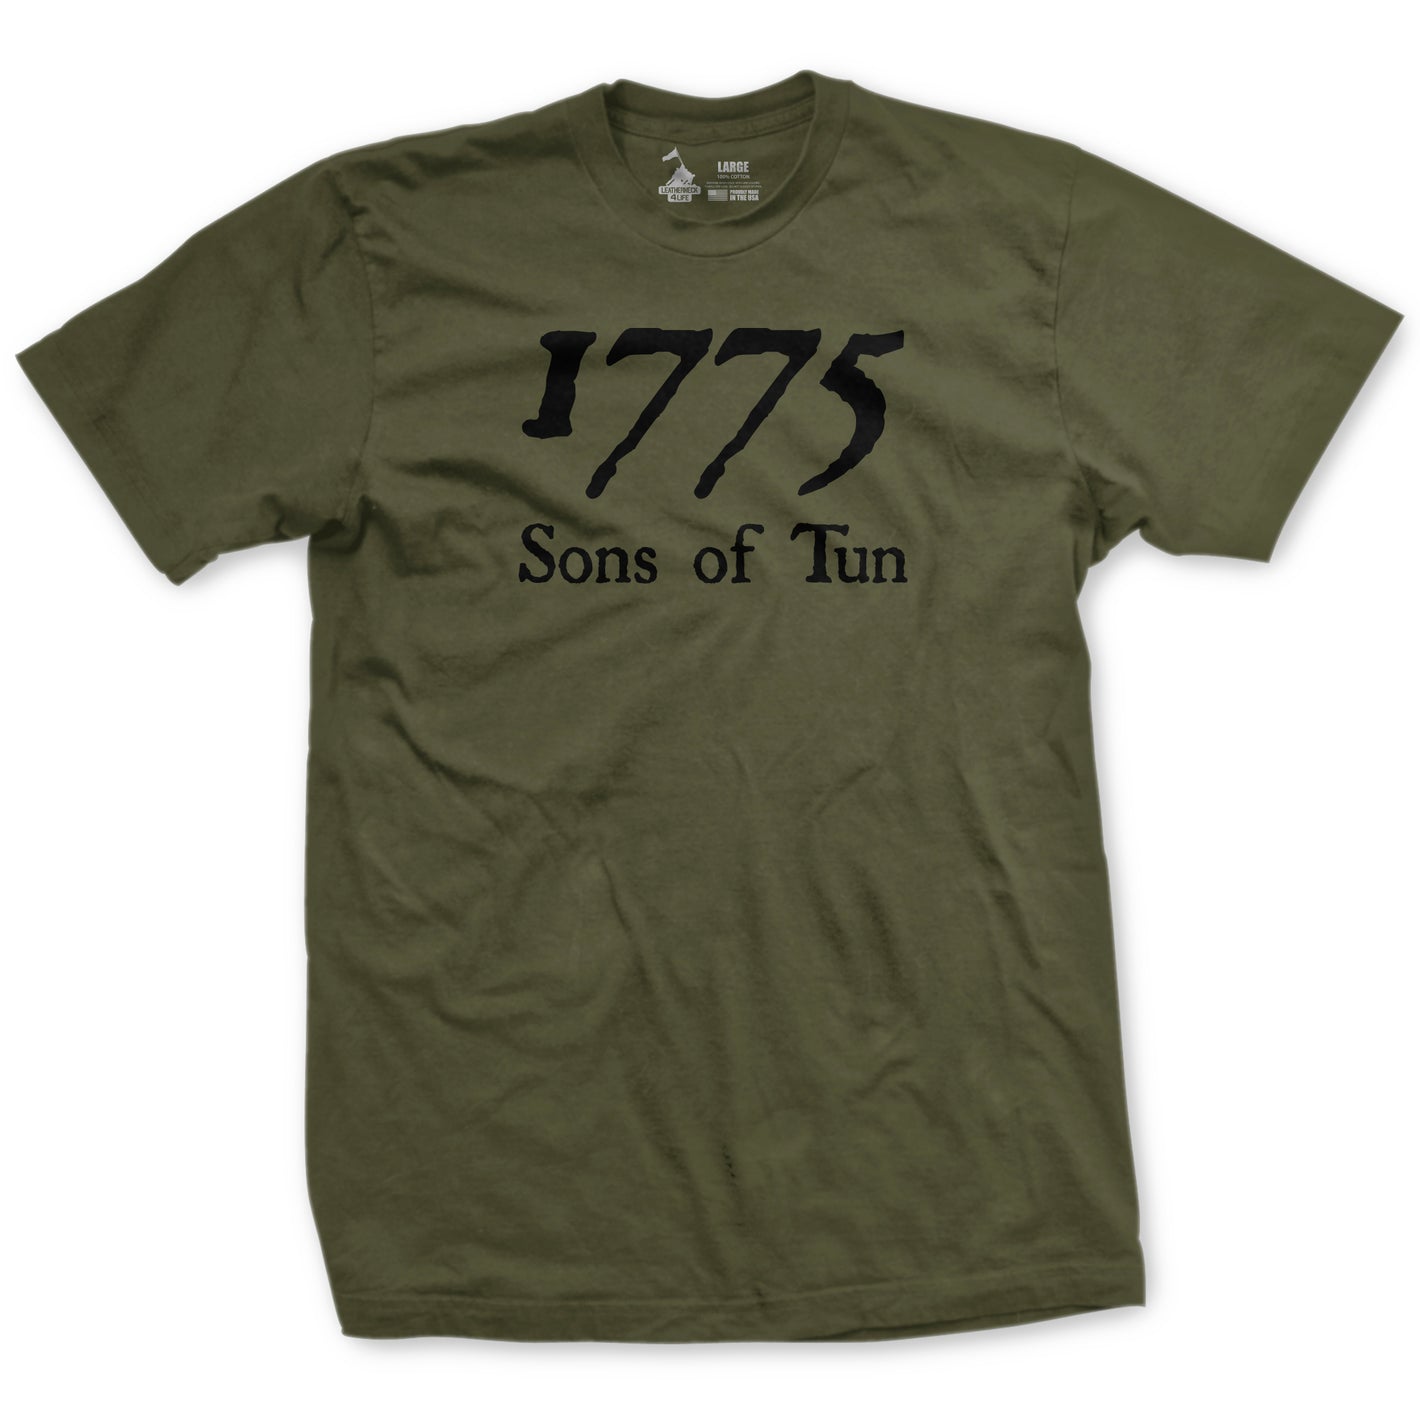 1775 Sons of Tun T-Shirt